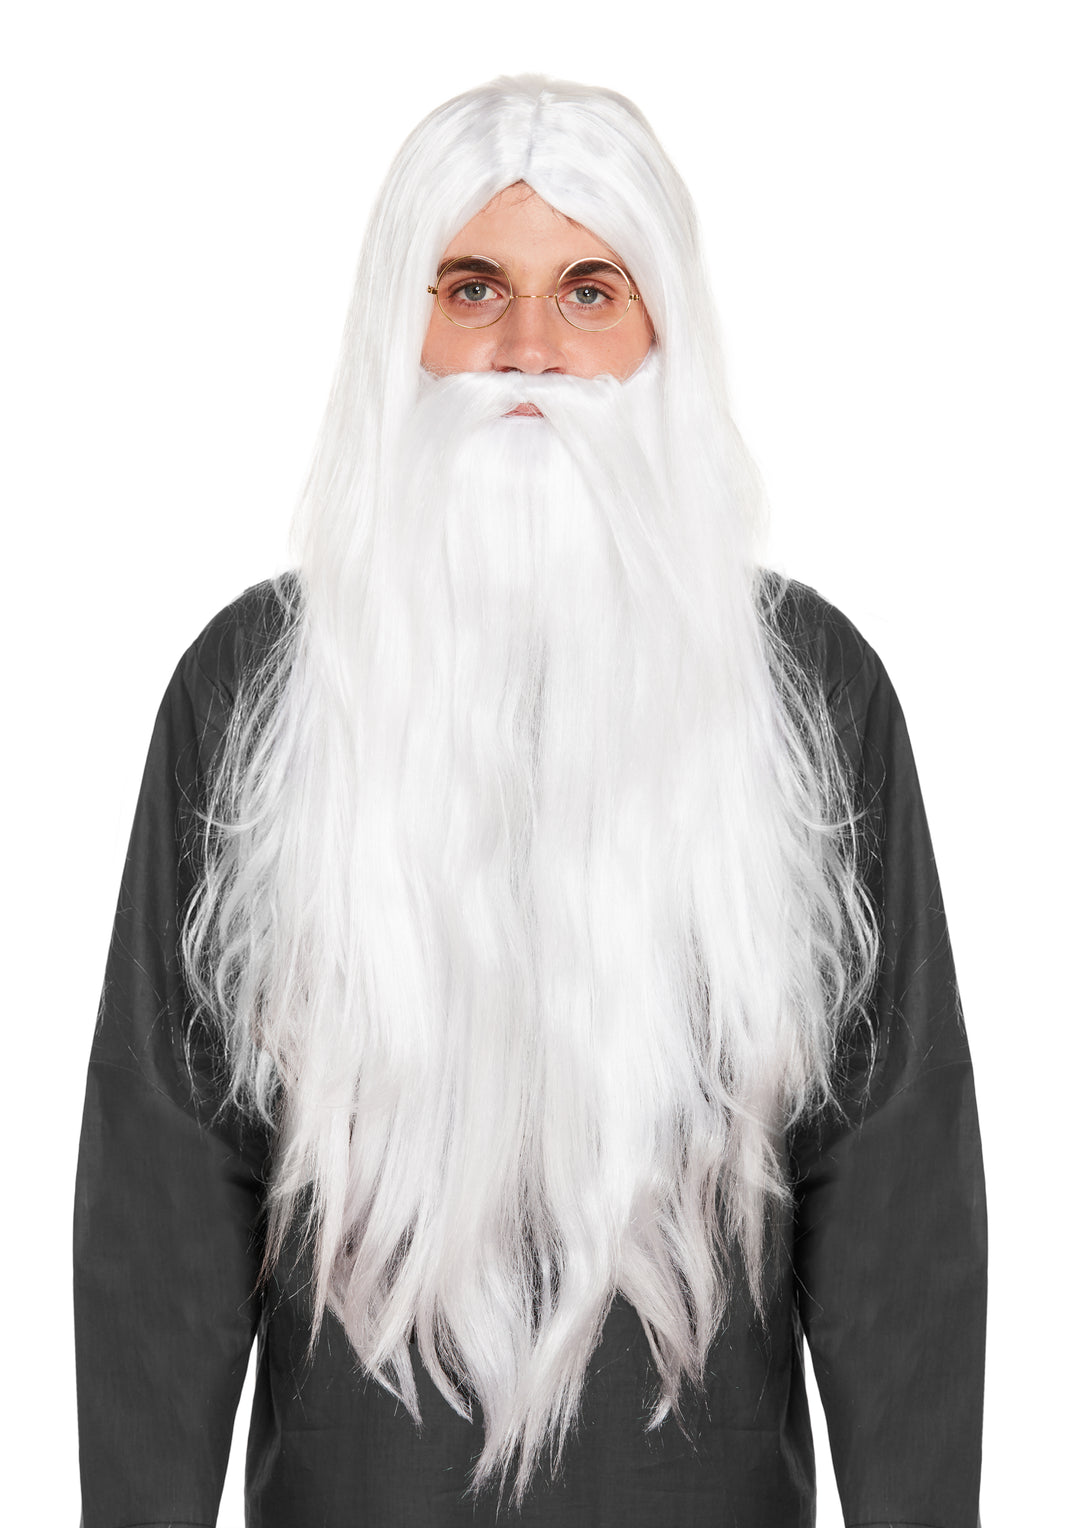 White Wizard Magical Fantasy Wig